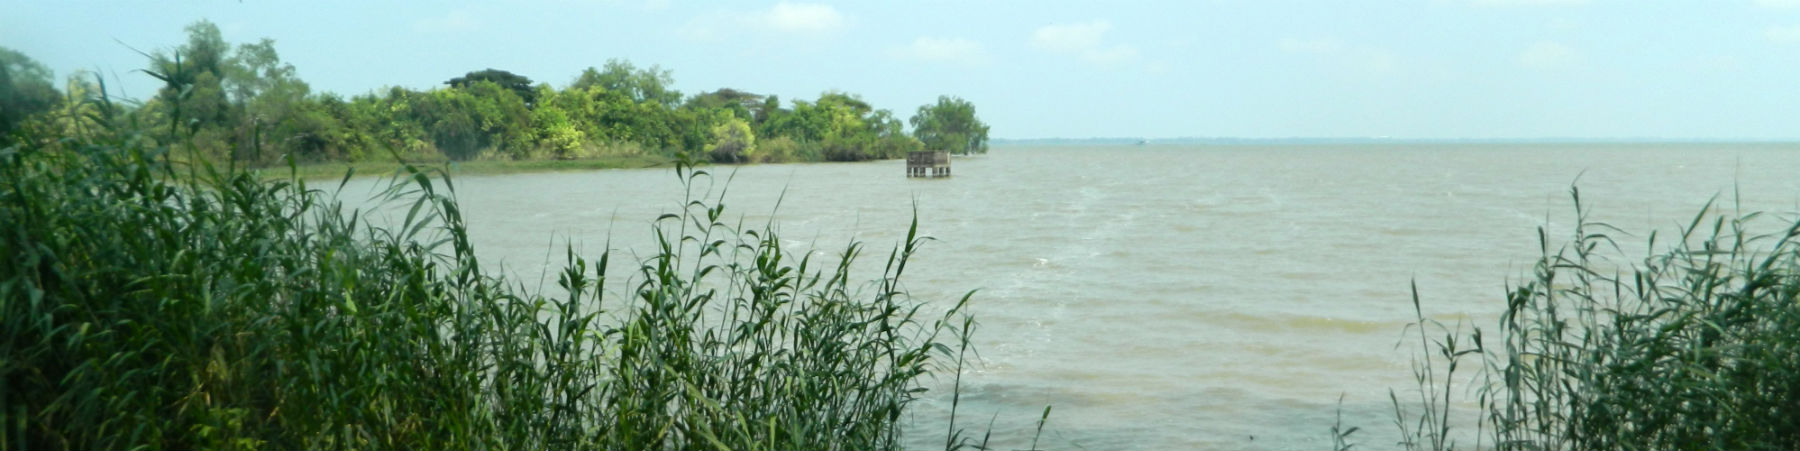 Songkhla Lake, Songkhla Province